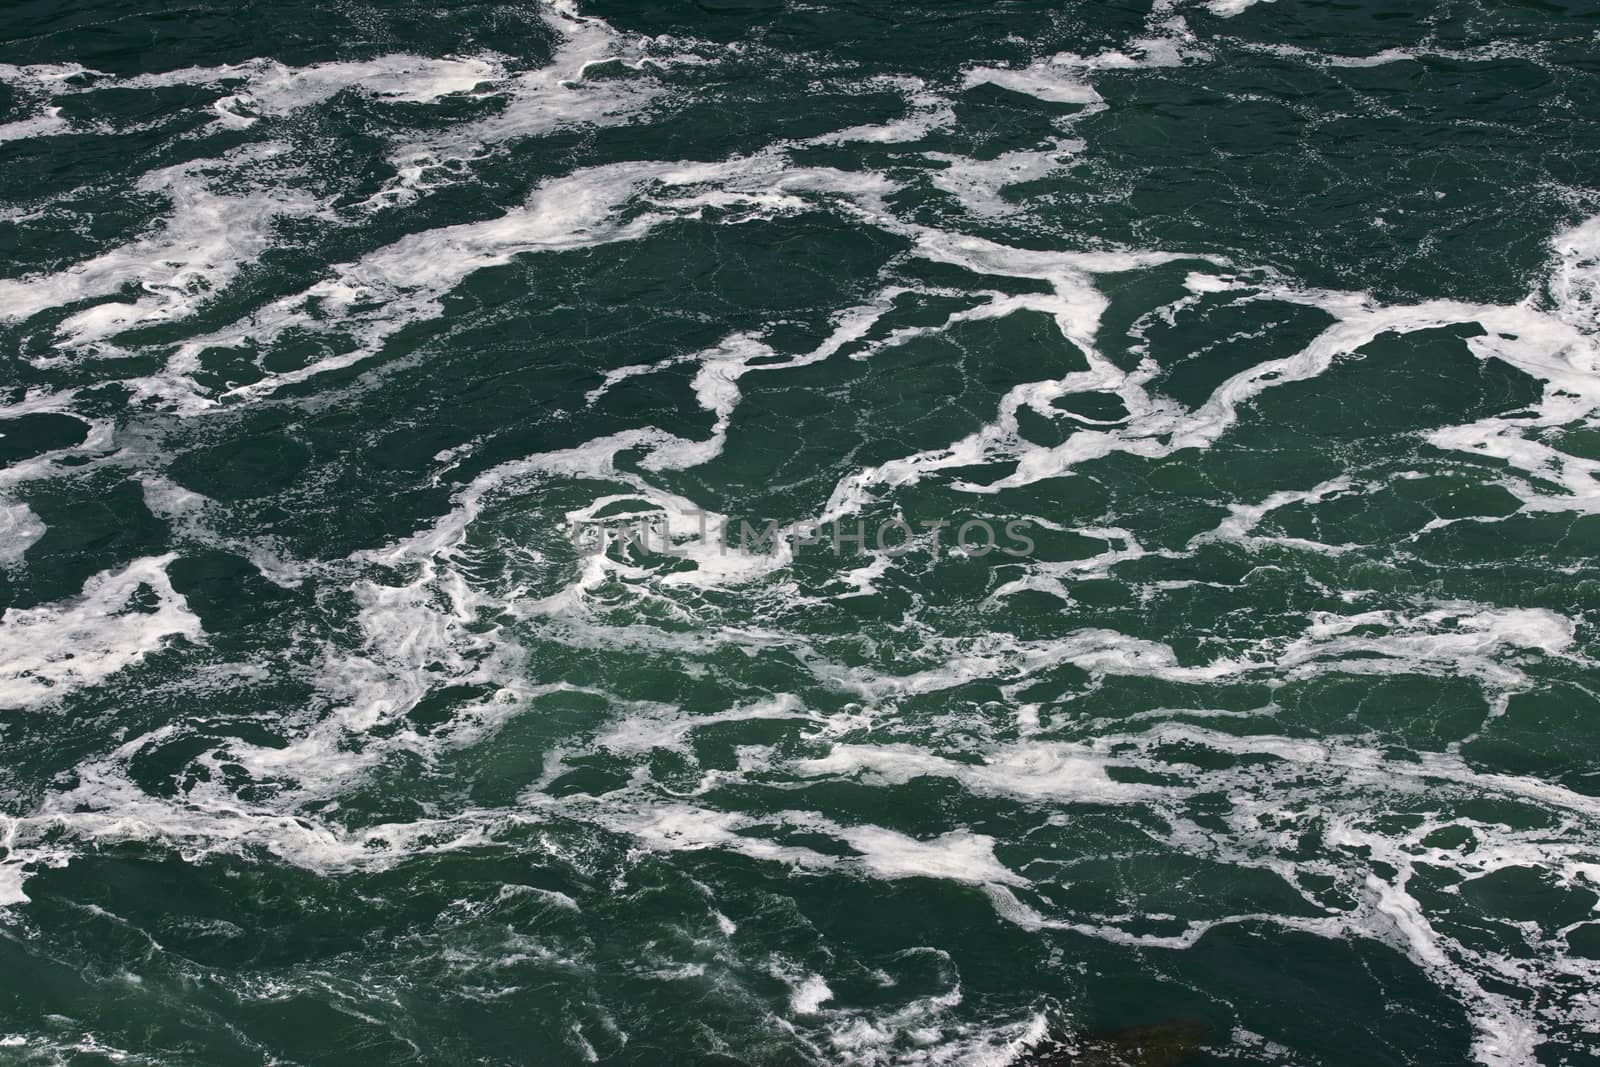 Beautiful photo of the water near amazing Niagara falls